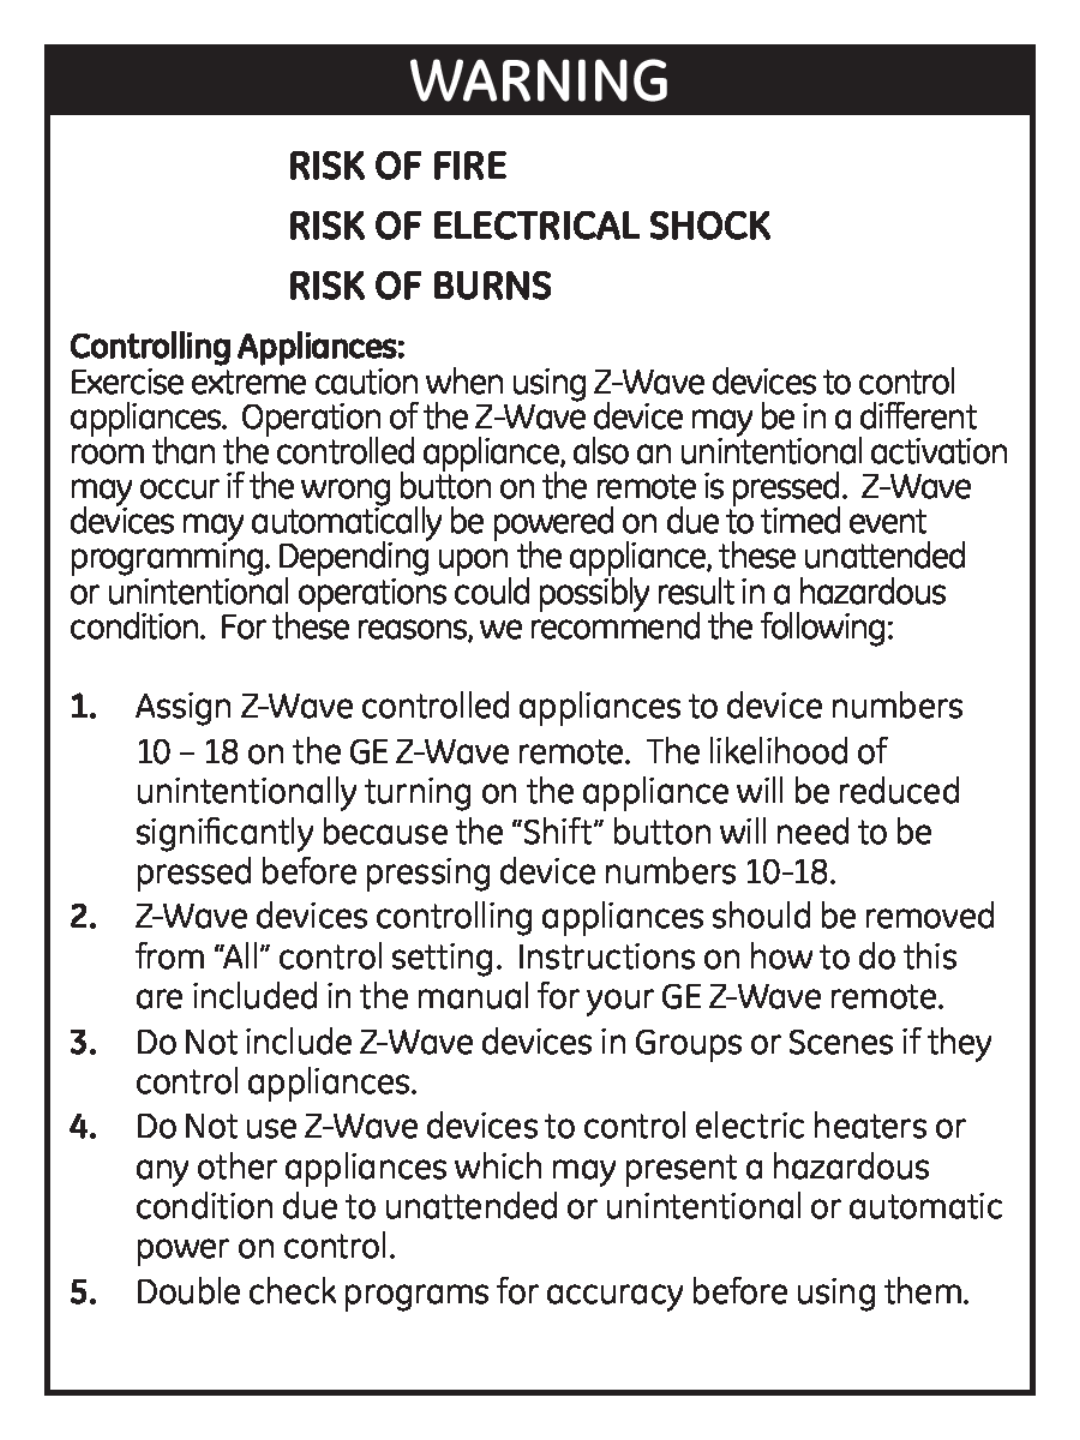 Jasco ZWAVEKIT manual Risk Of Fire Risk Of Electrical Shock, Risk Of Burns, Controlling Appliances 